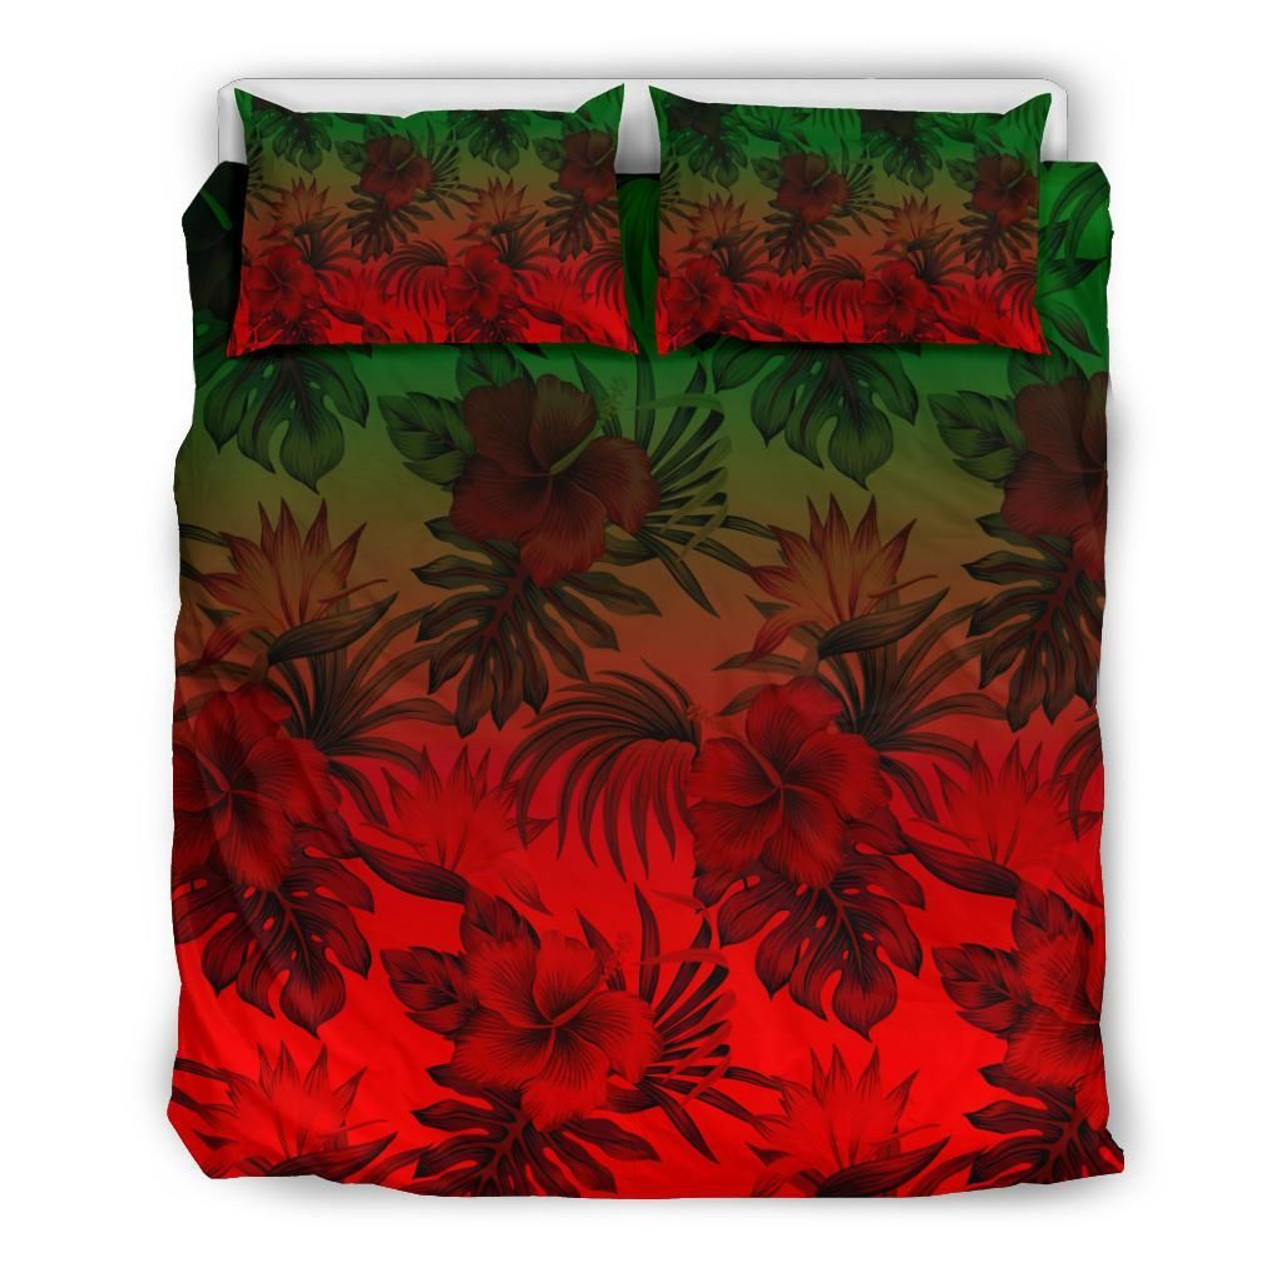 Polynesian Bedding Set - Red Hibiscus Patterns 3